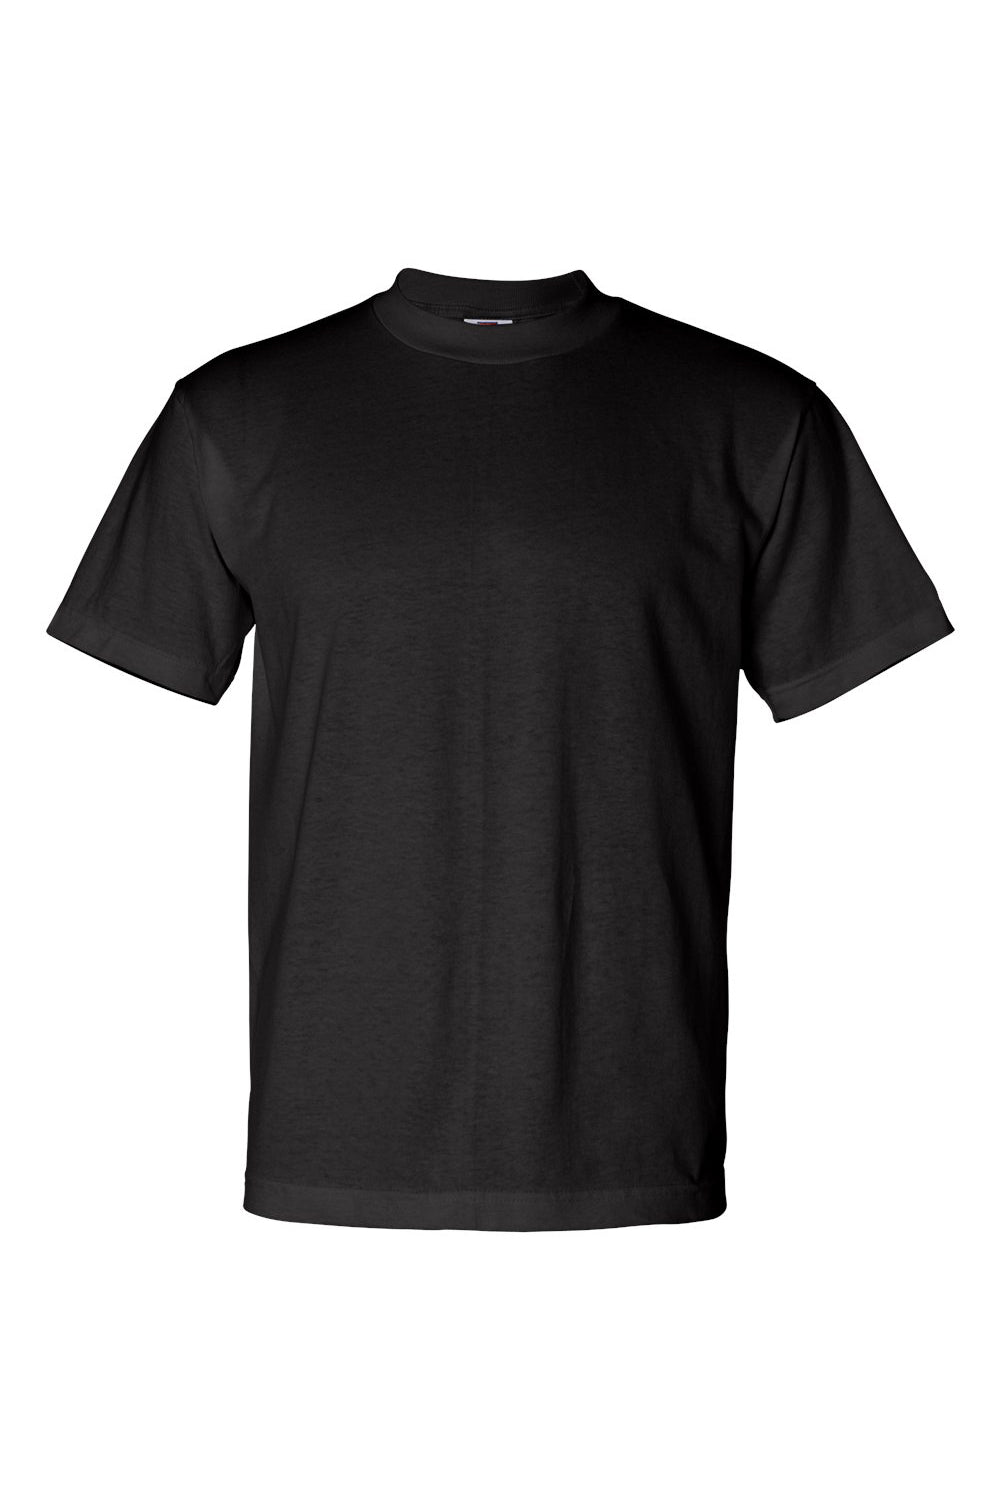 Bayside 1701 Mens USA Made Short Sleeve Crewneck T-Shirt Black Flat Front